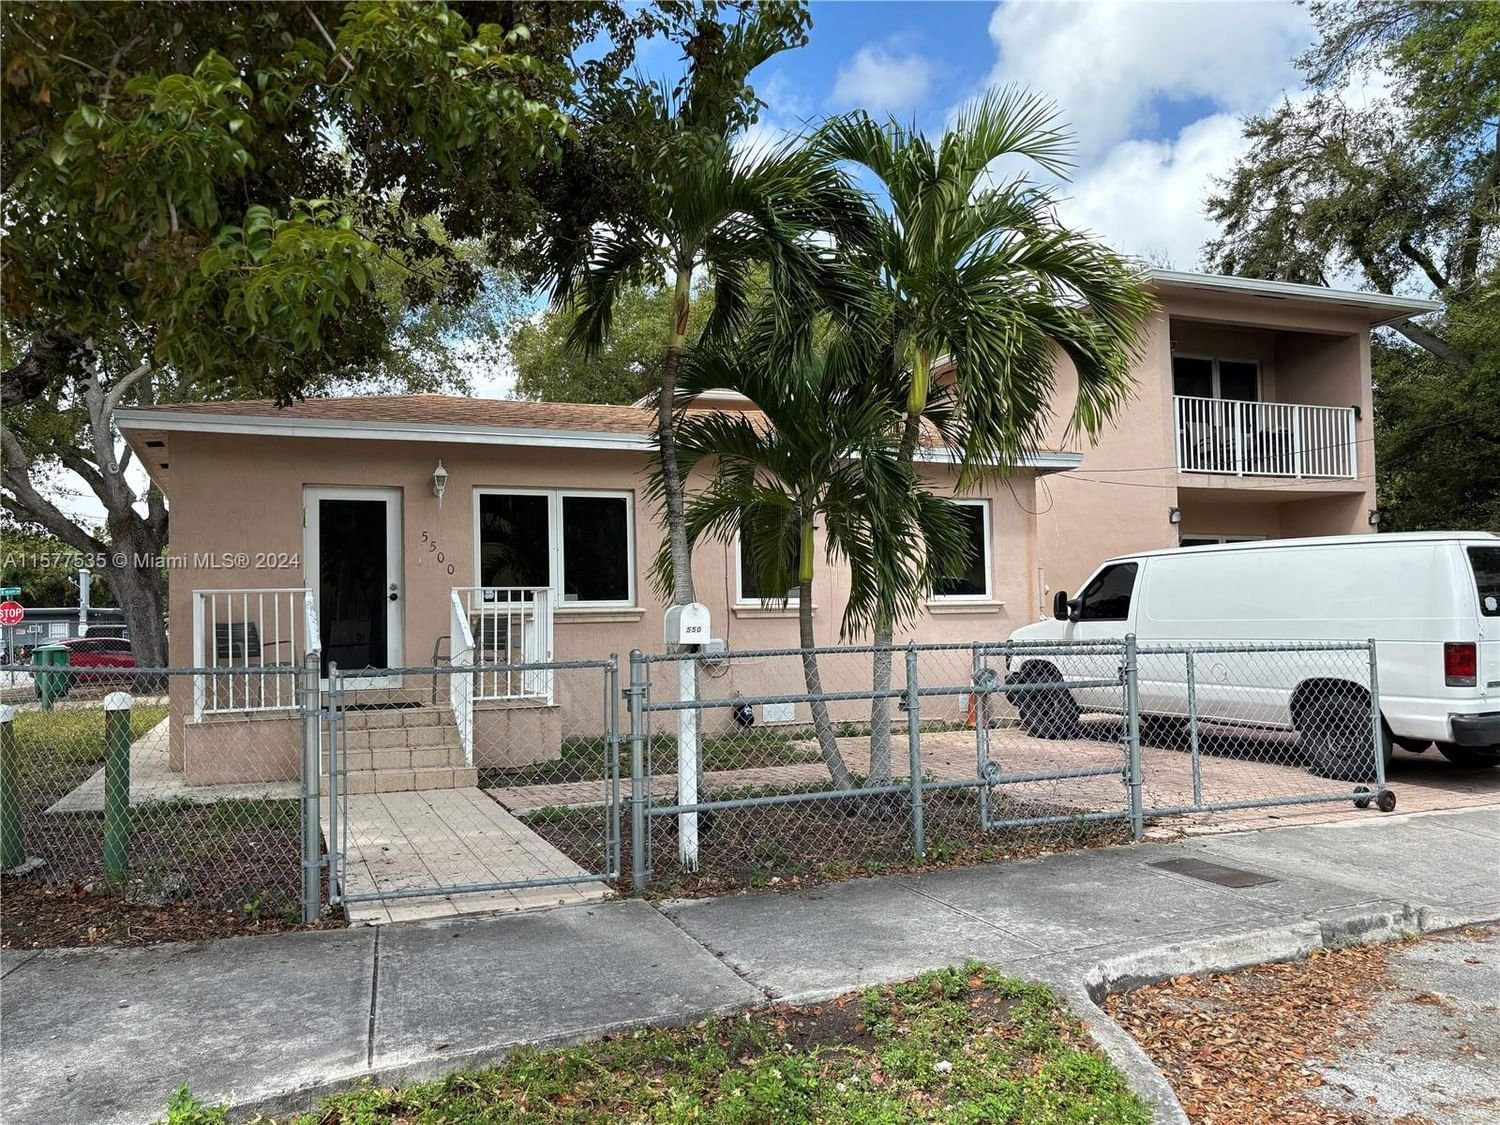 Real estate property located at 5500 Miami Ct, Miami-Dade County, COMMERCIAL CENTER, Miami, FL